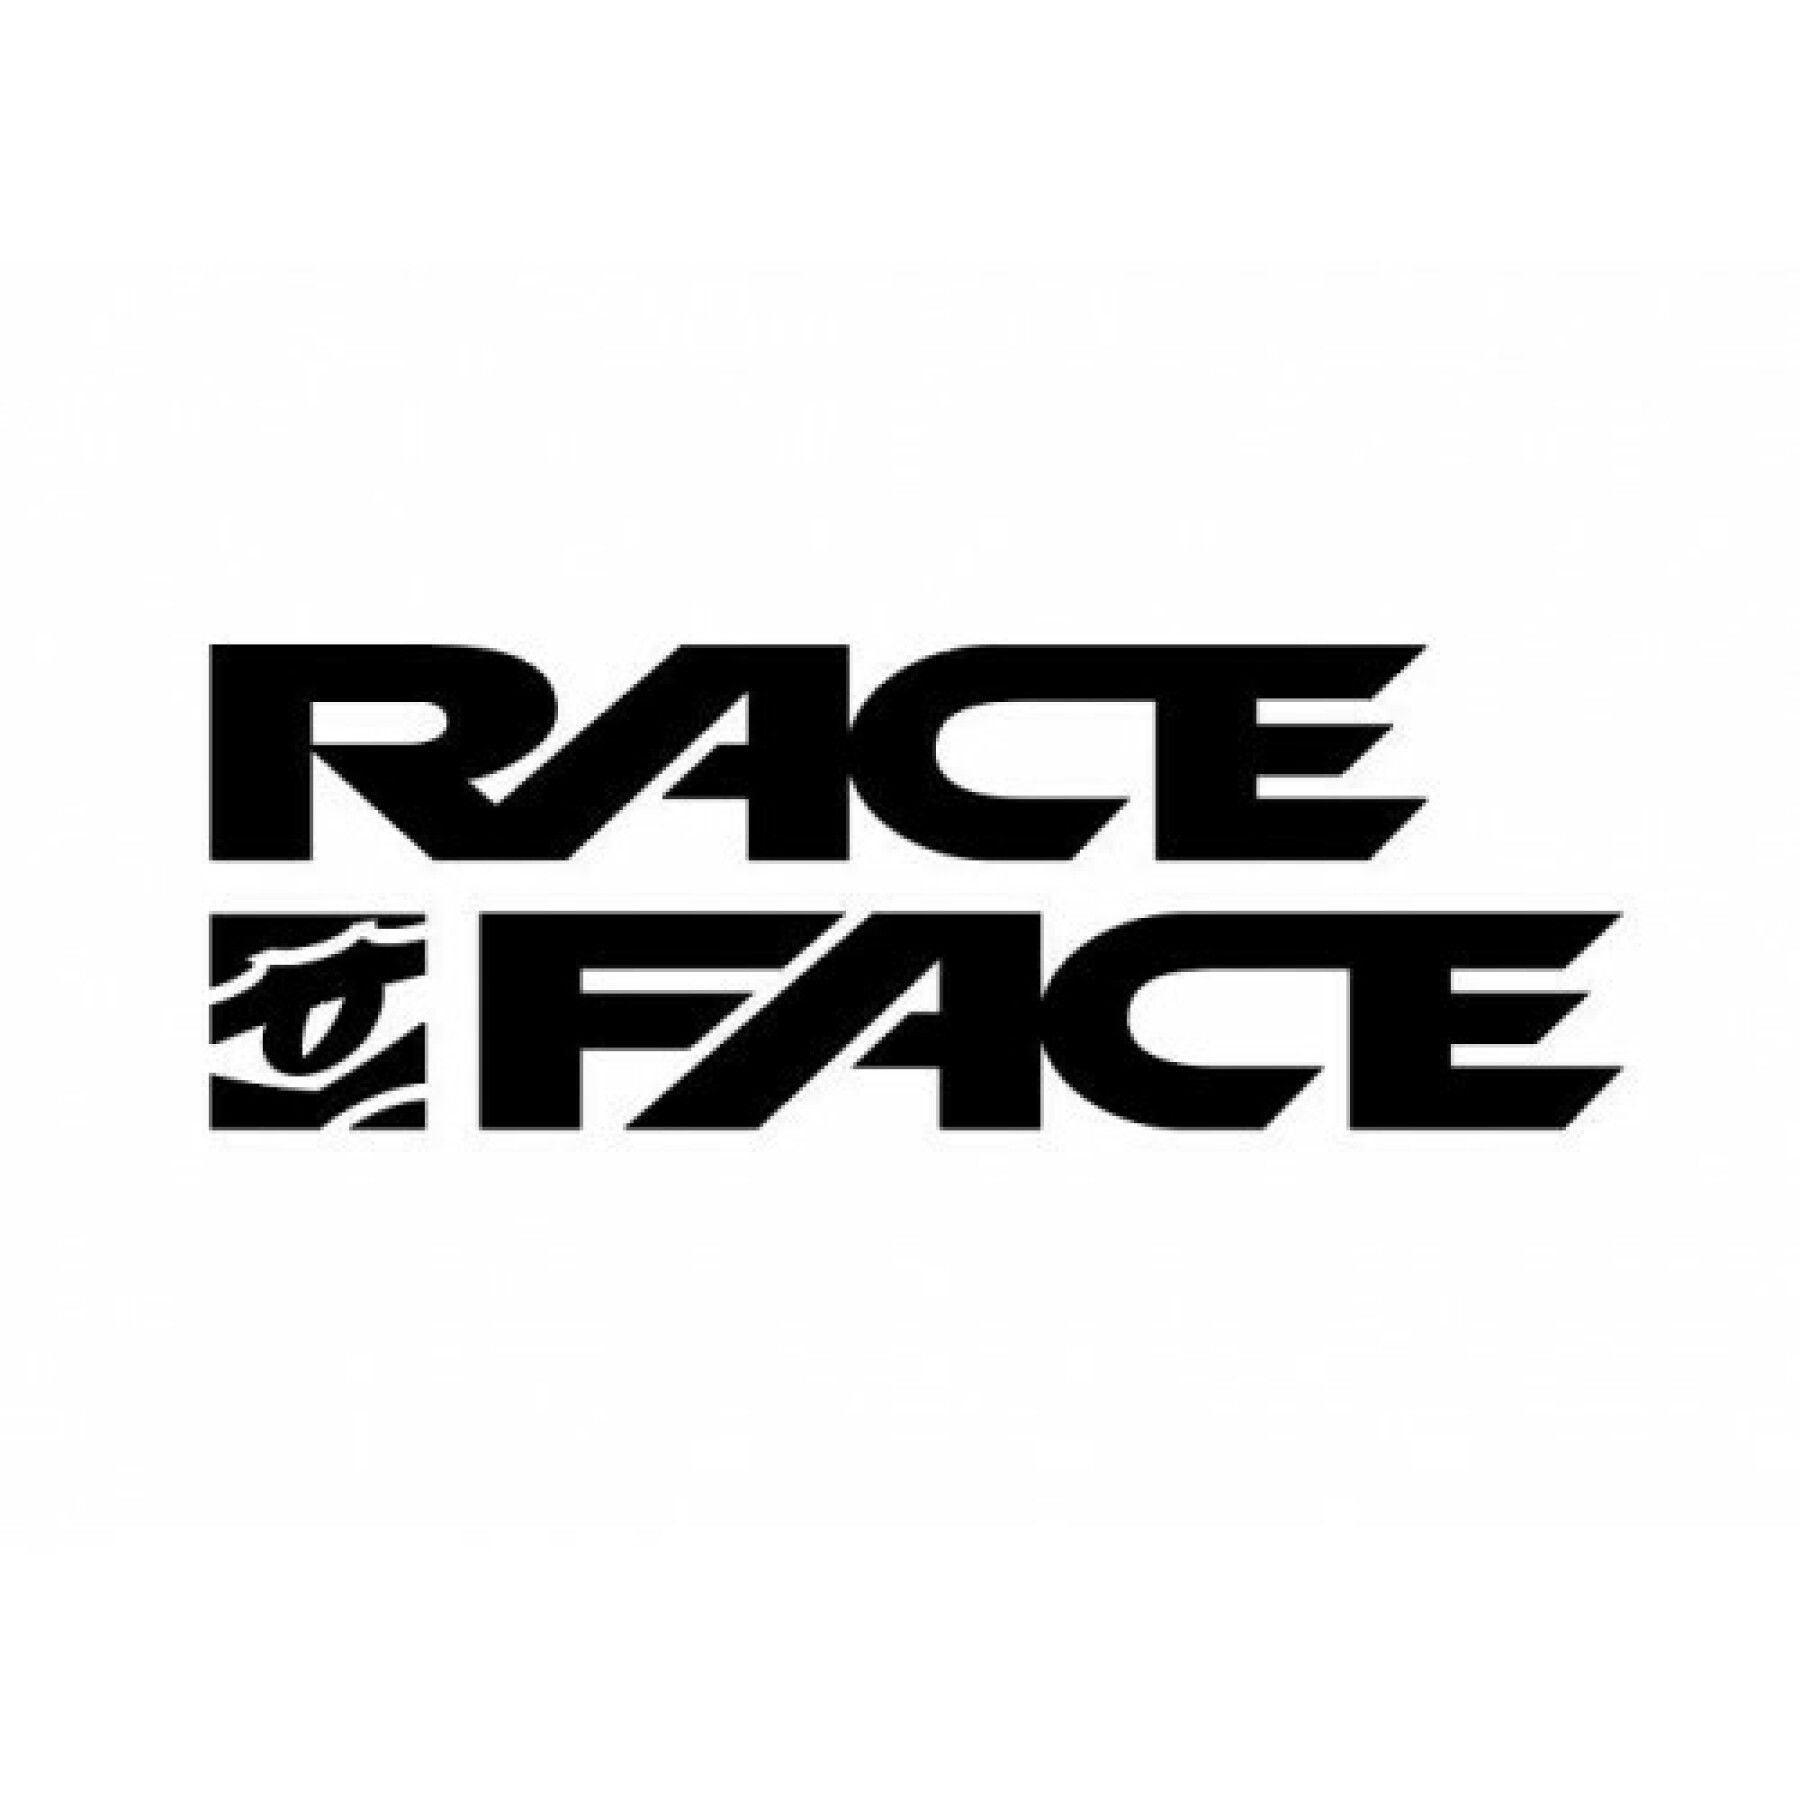 Llanta Race Face arc offset - 40 - 29 - 32t